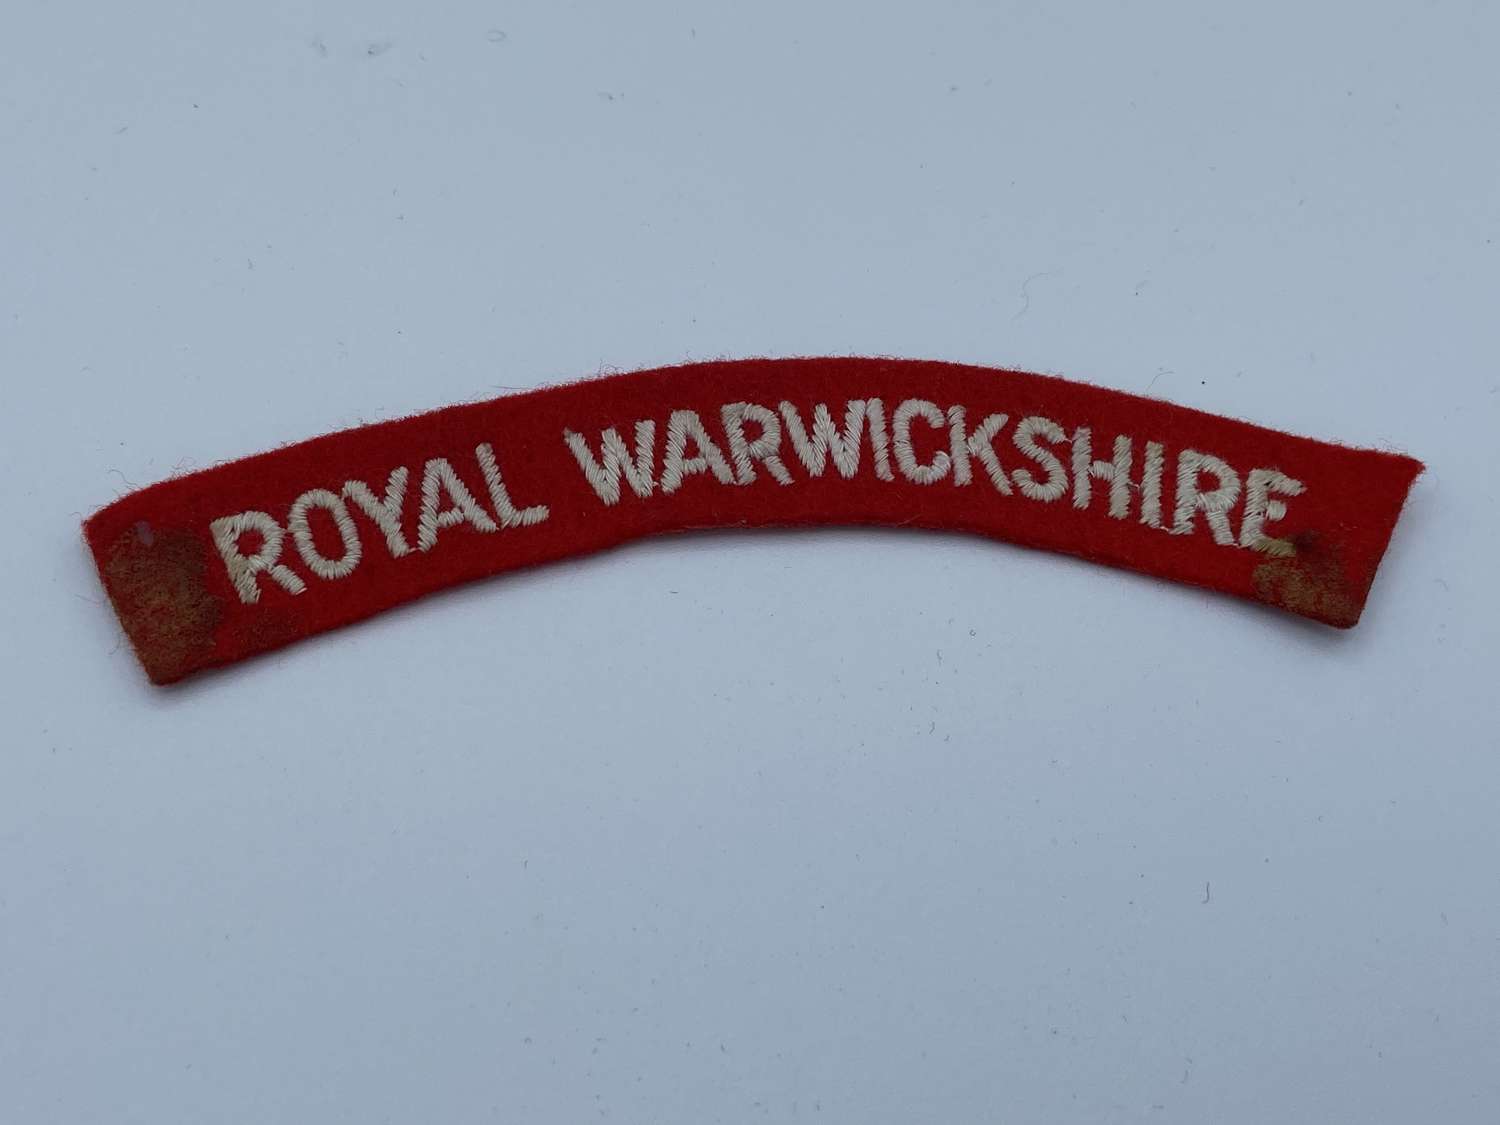 Ww2 British Army Royal Warwickshire Shoulder Title Patch